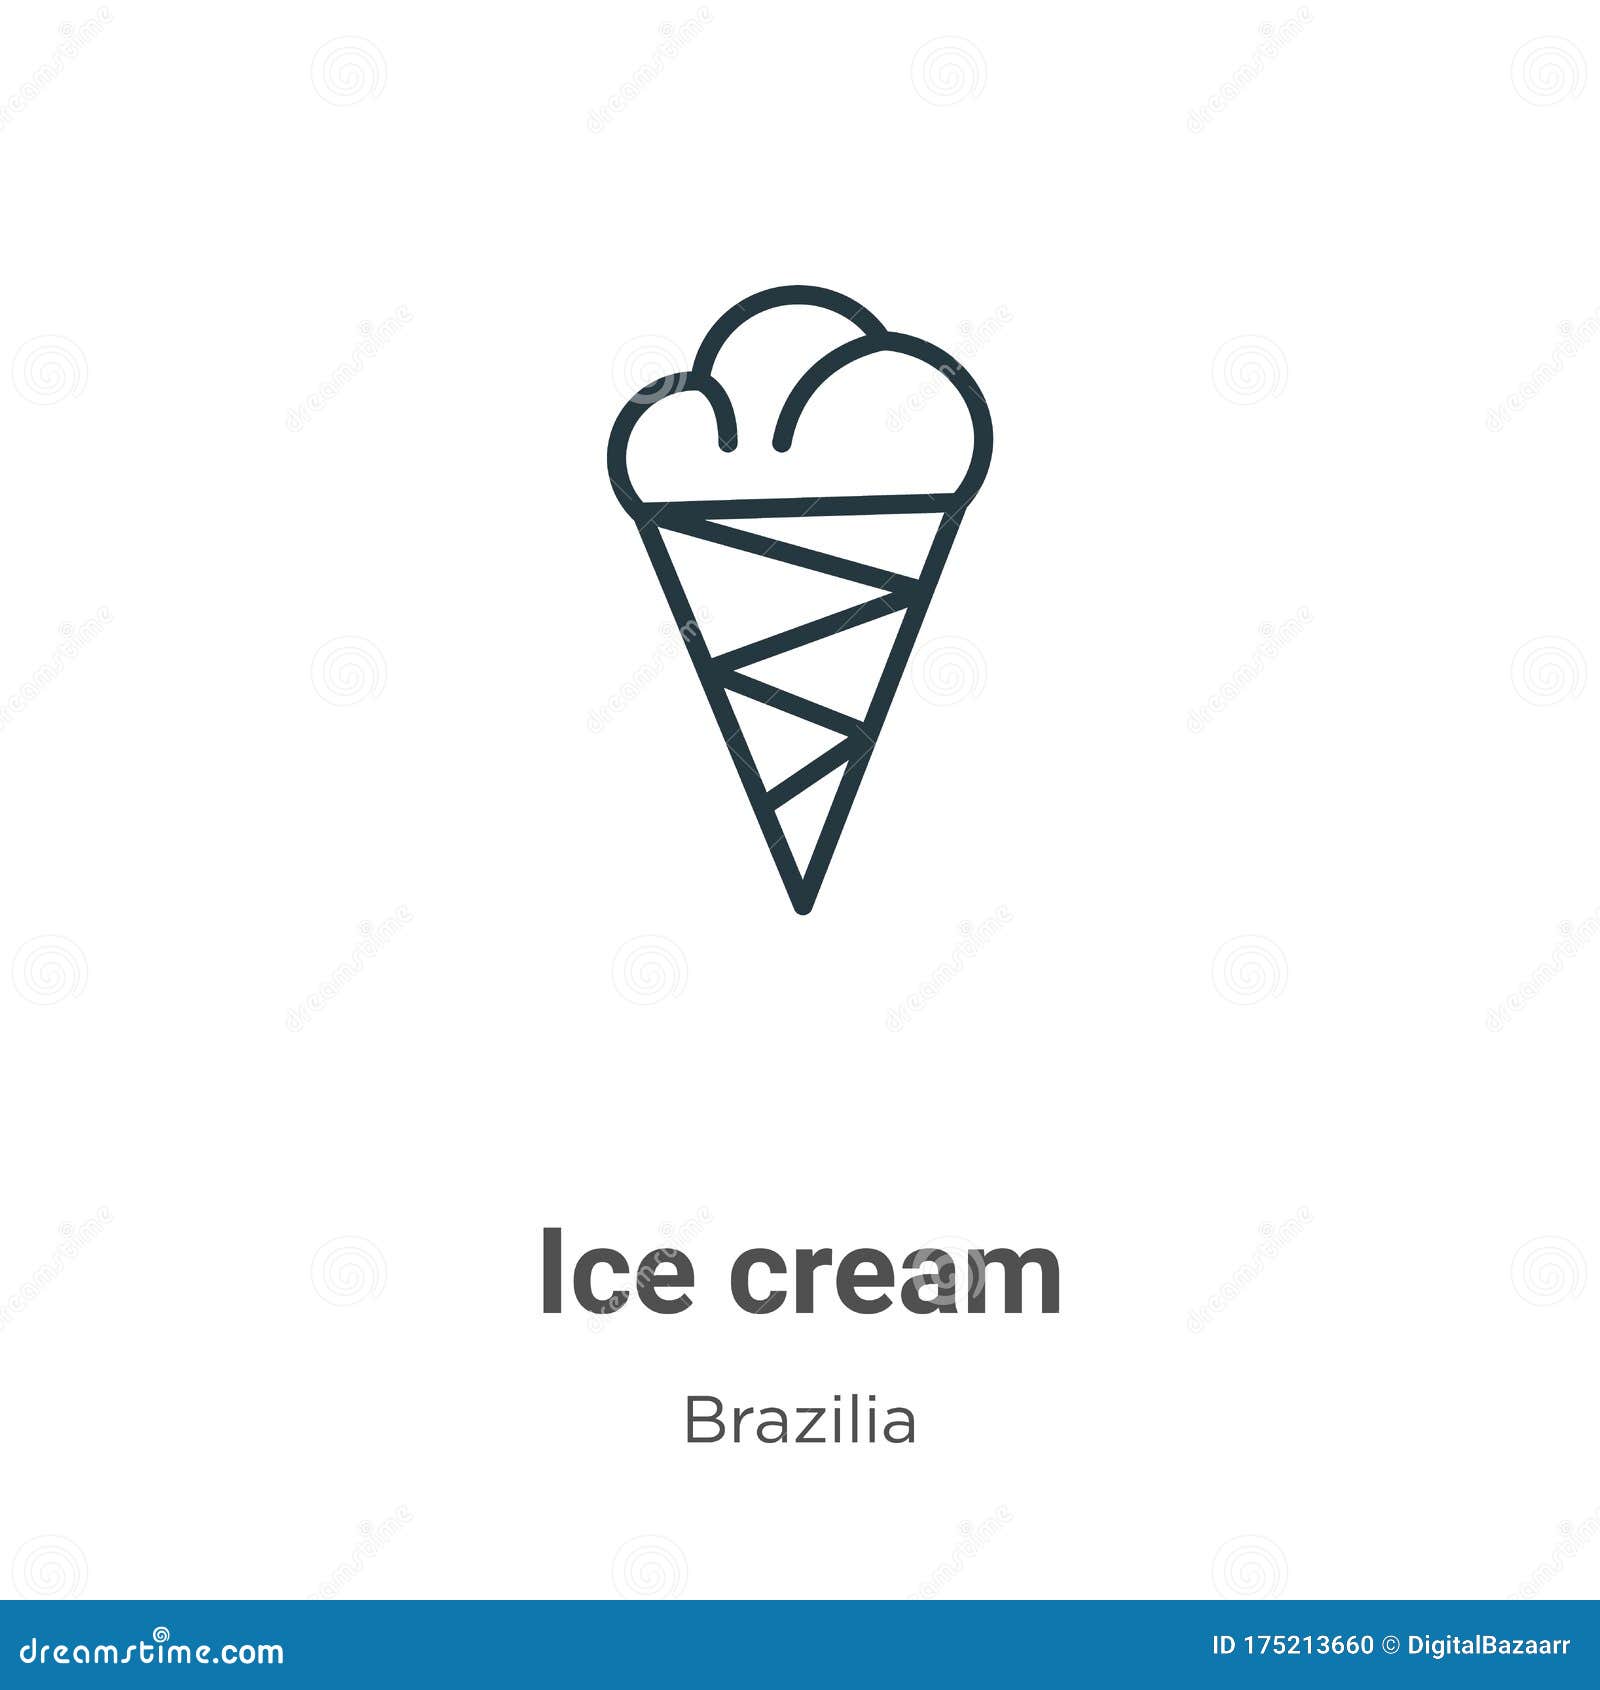 ice cream outline  icon. thin line black ice cream icon, flat  simple   from editable brazilia